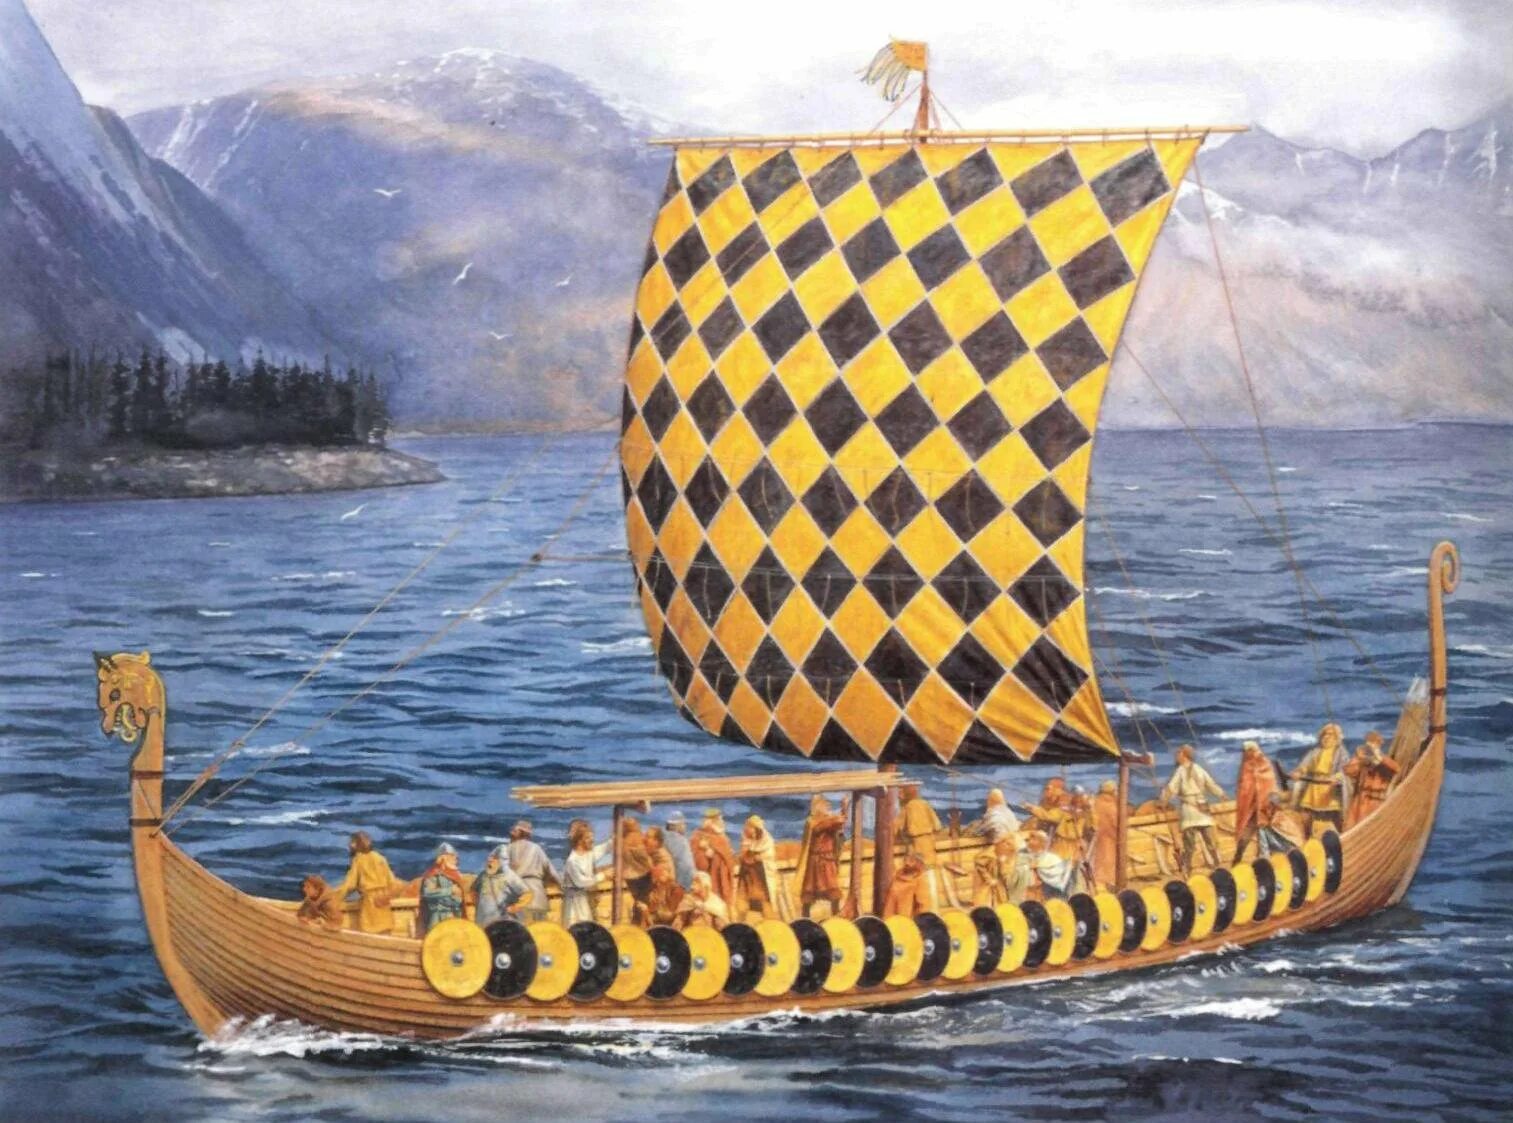 Карви корабль викингов. Ладья викингов дракар. Гокштадский корабль (дракар). Корабль викингов Драккар 10 век. Большая ладья славян